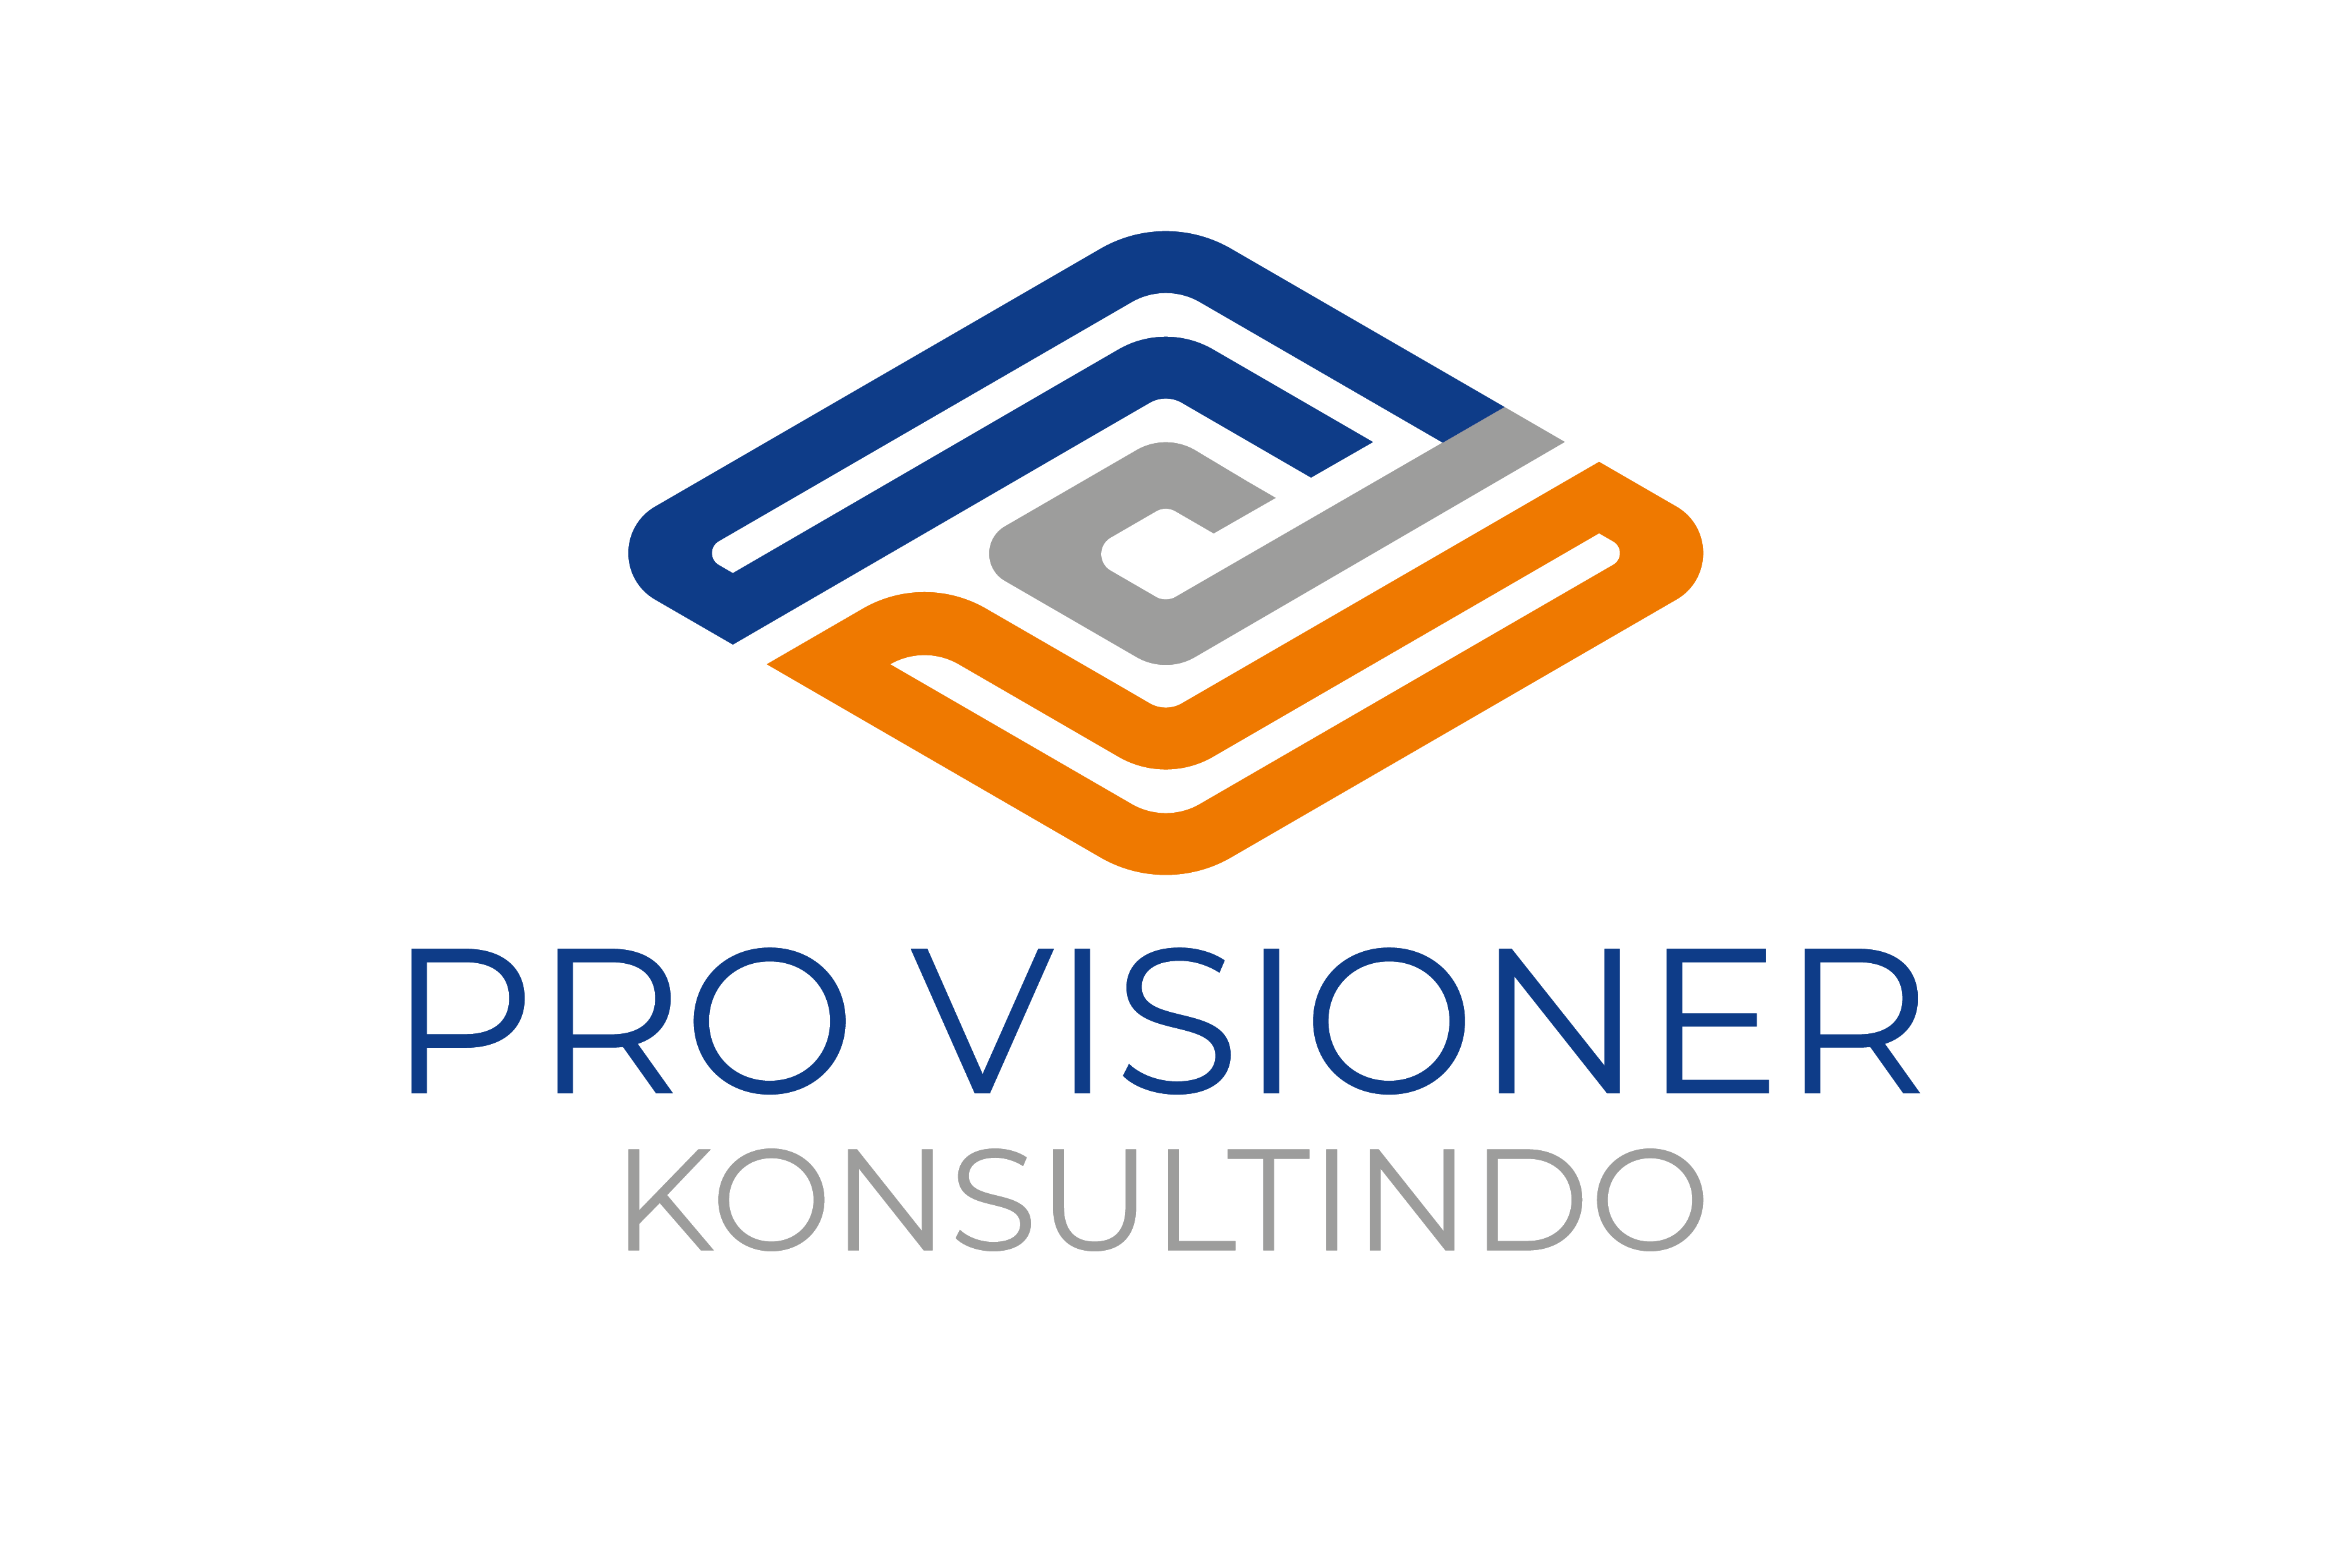 PT Pro Visioner Konsultindo